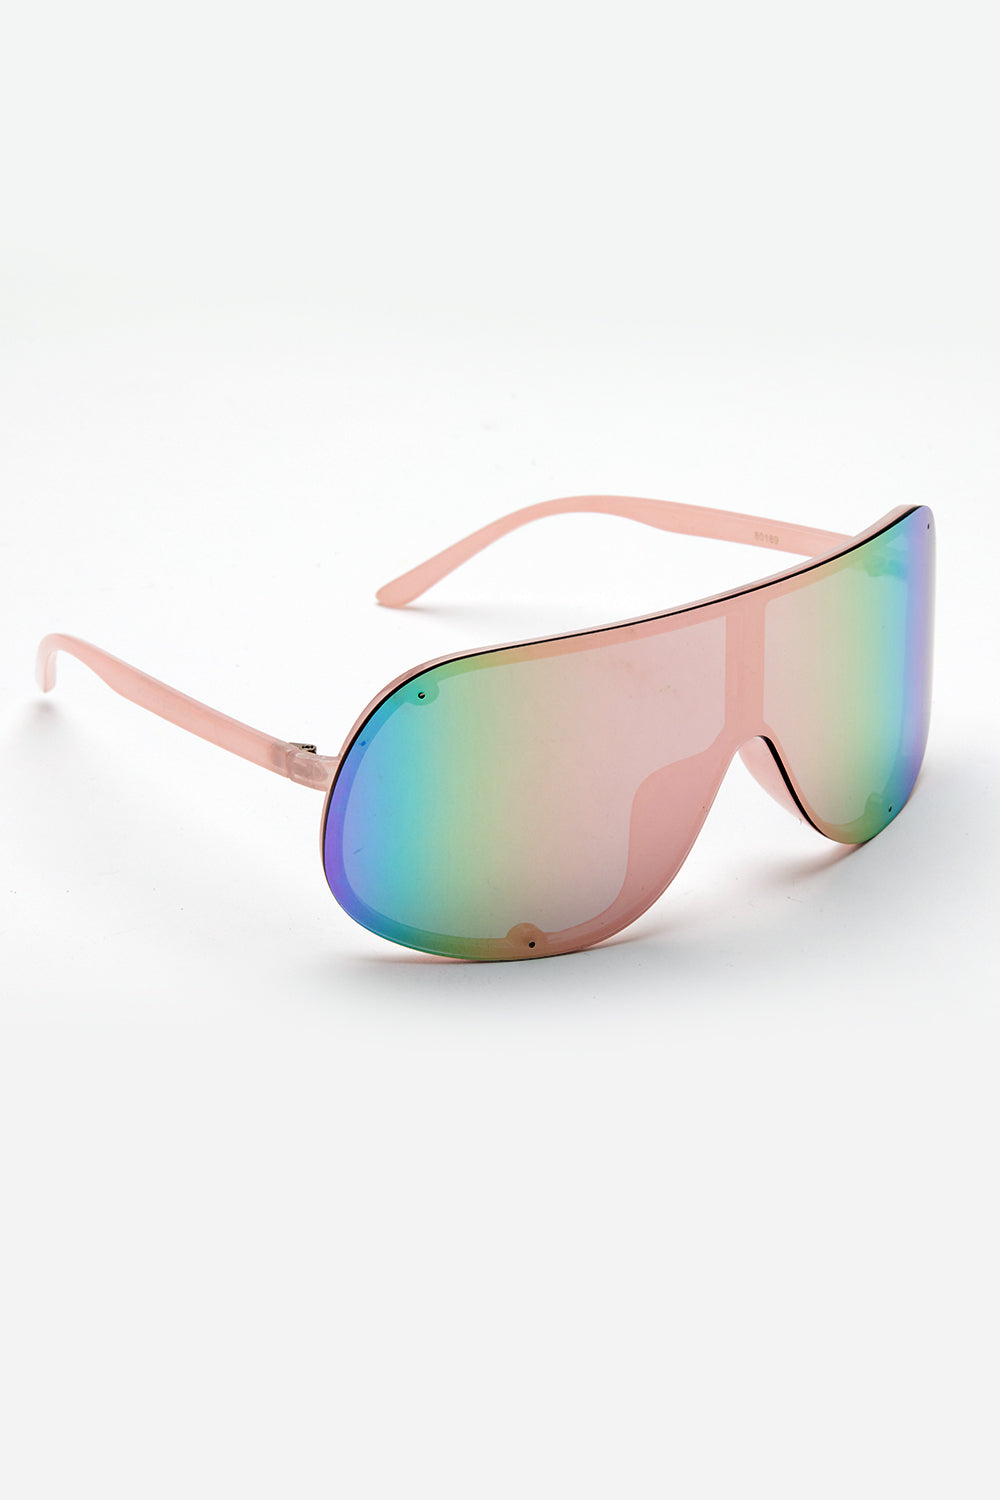 Rimless Infinity Sunglasses - Slick It Up 